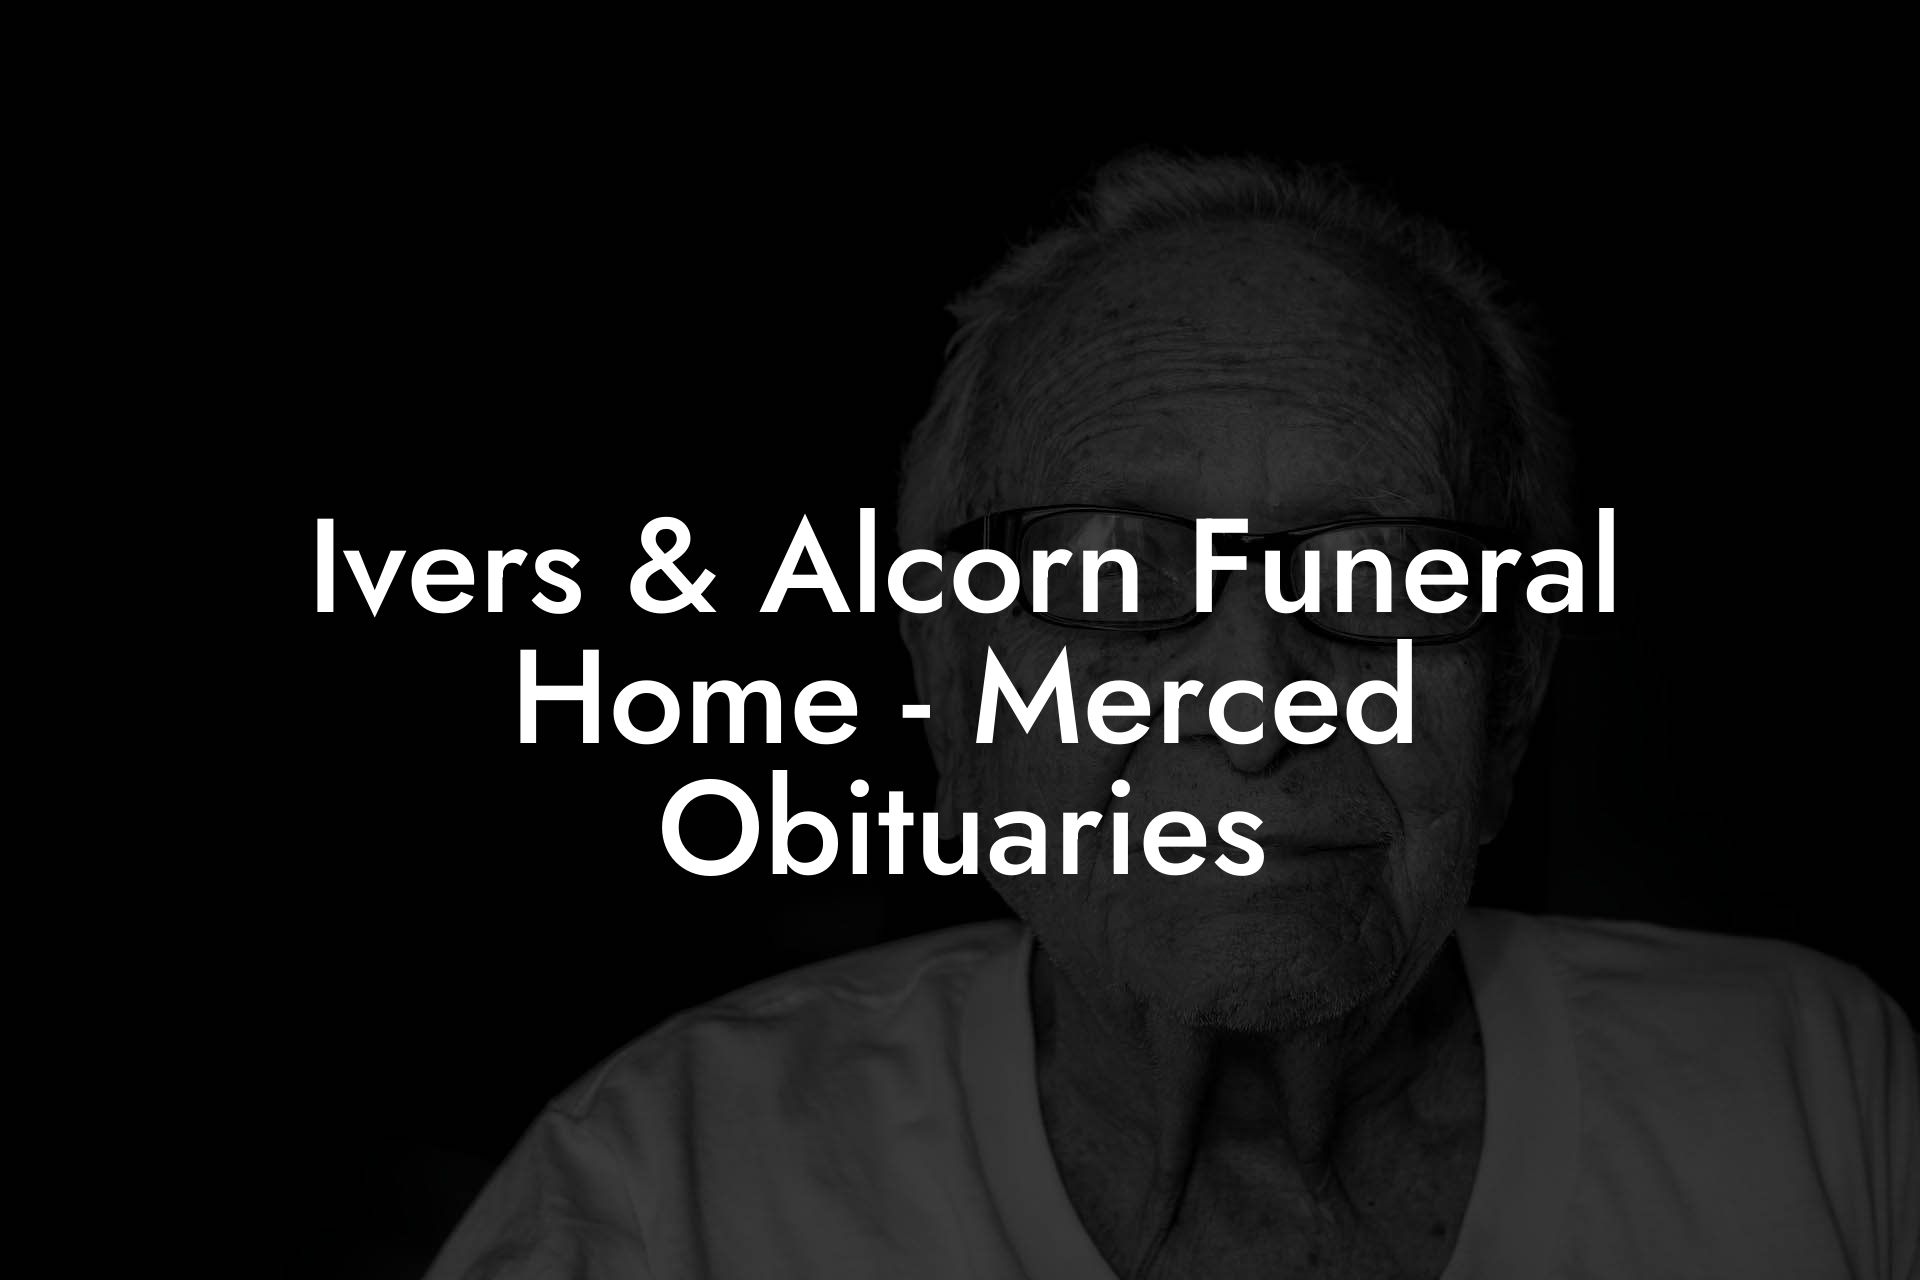 Ivers & Alcorn Funeral Home - Merced Obituaries